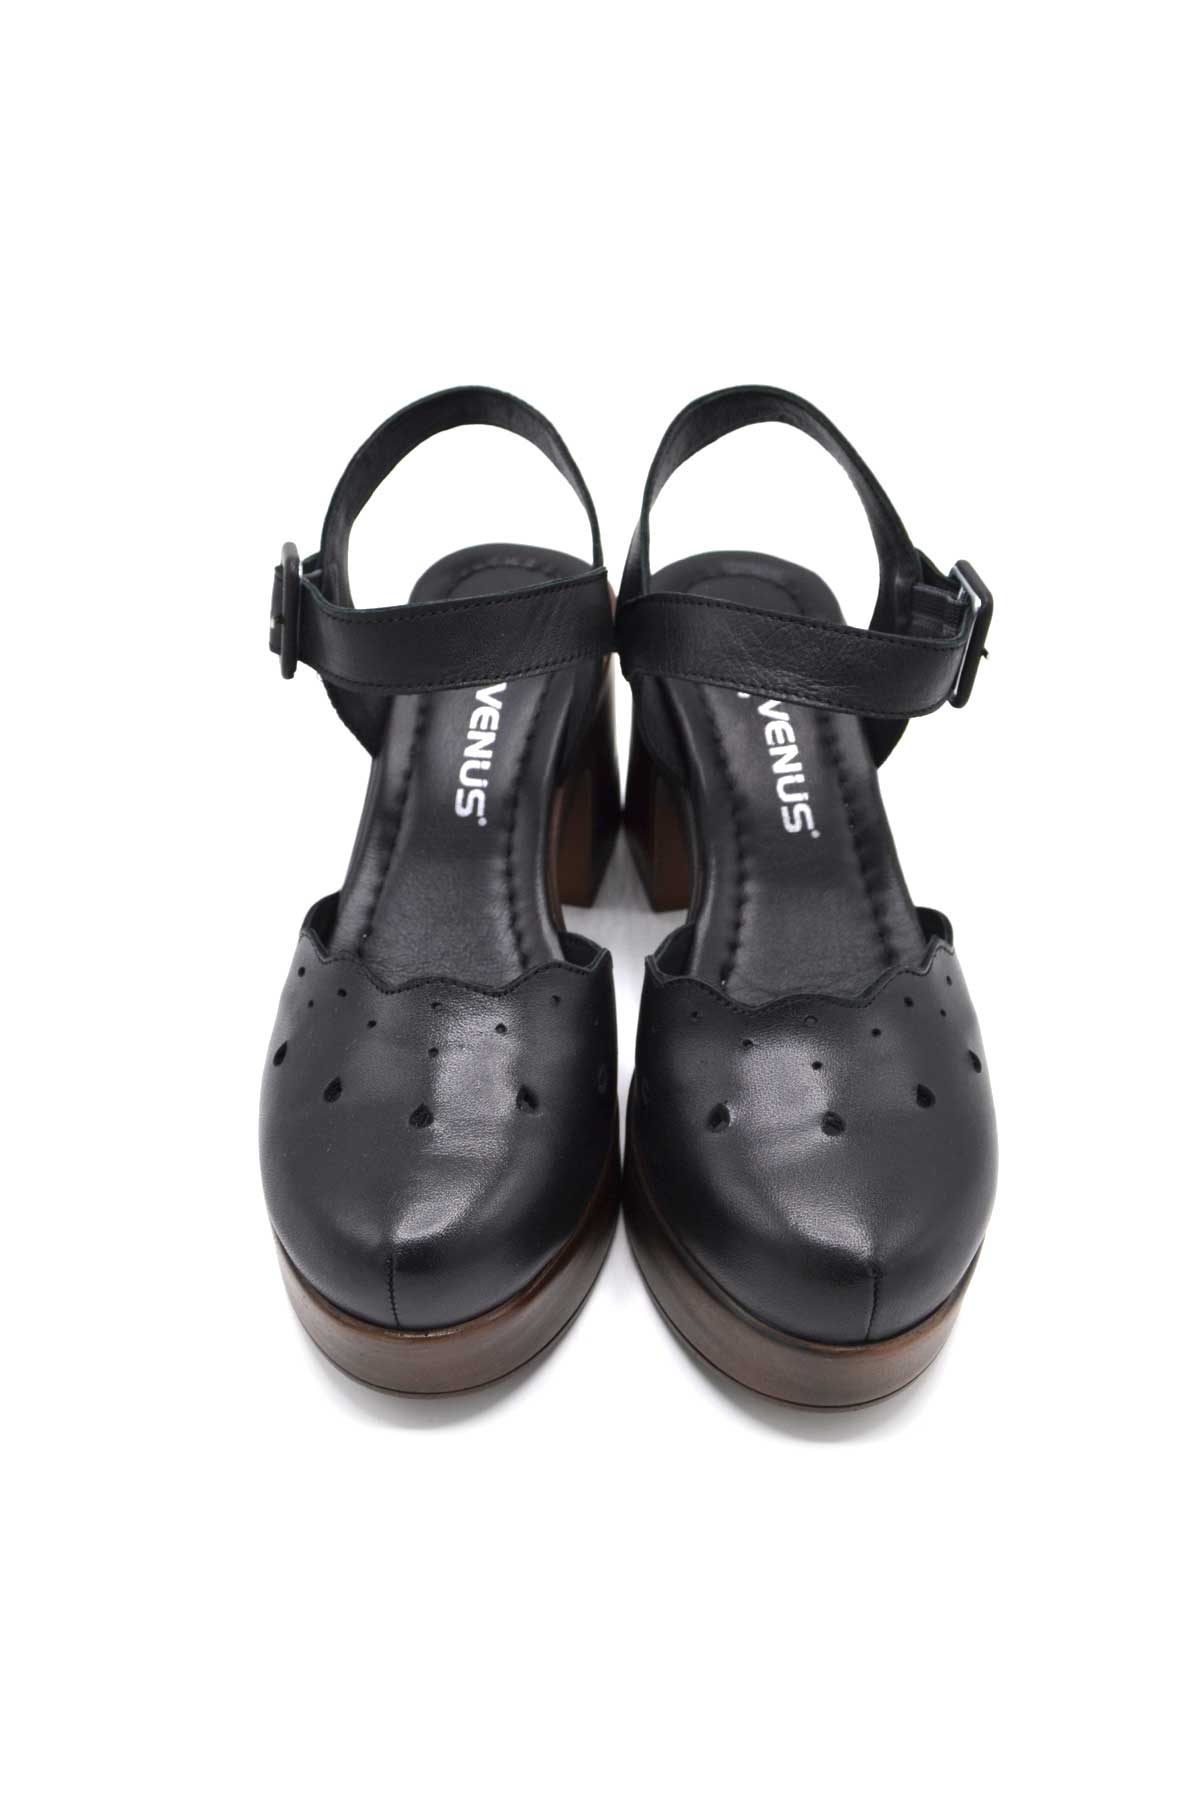 Kadın Apartman Topuk Deri Sandalet Siyah 2217001Y